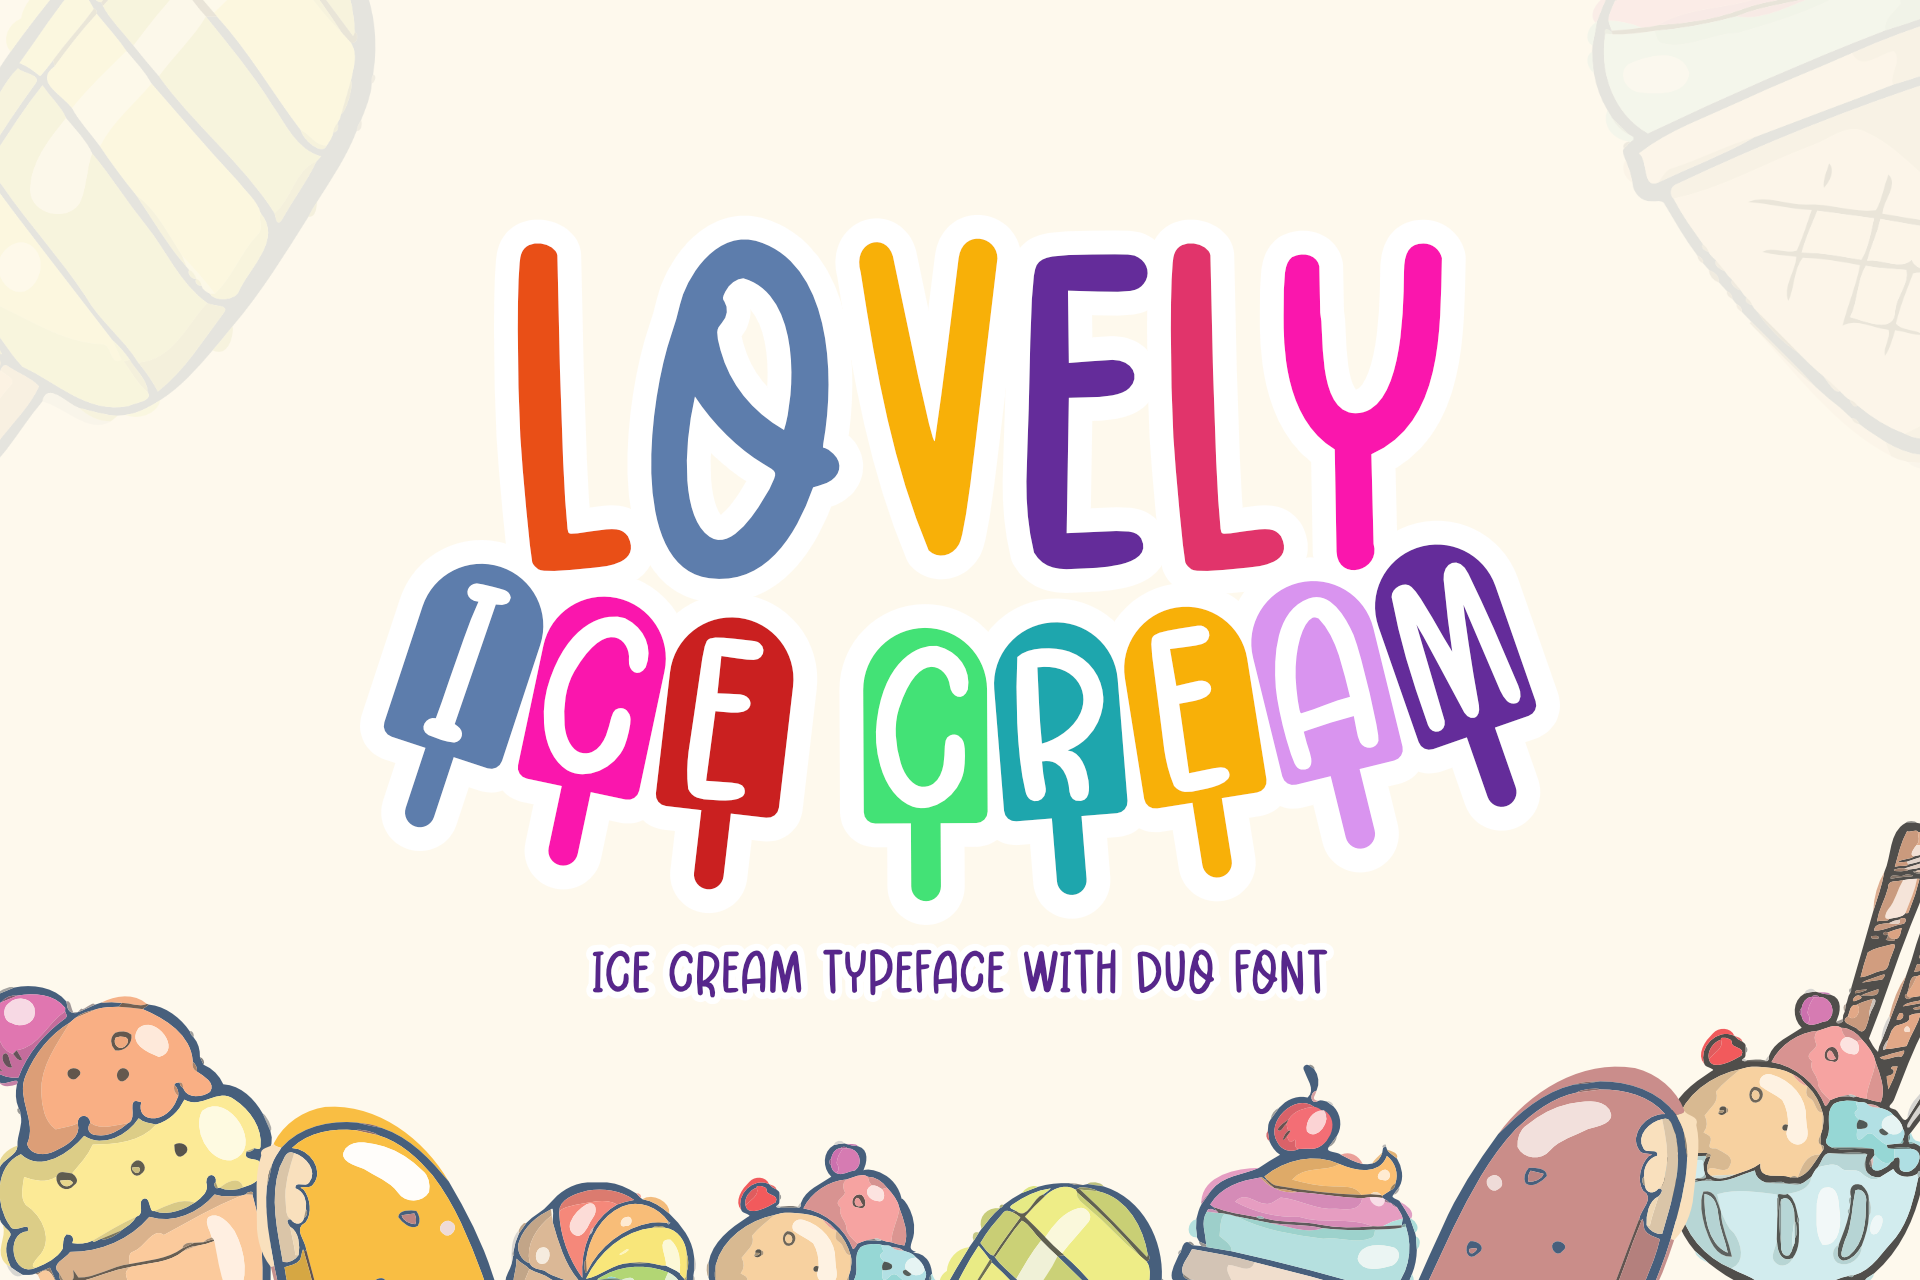 Lovely Ice Cream